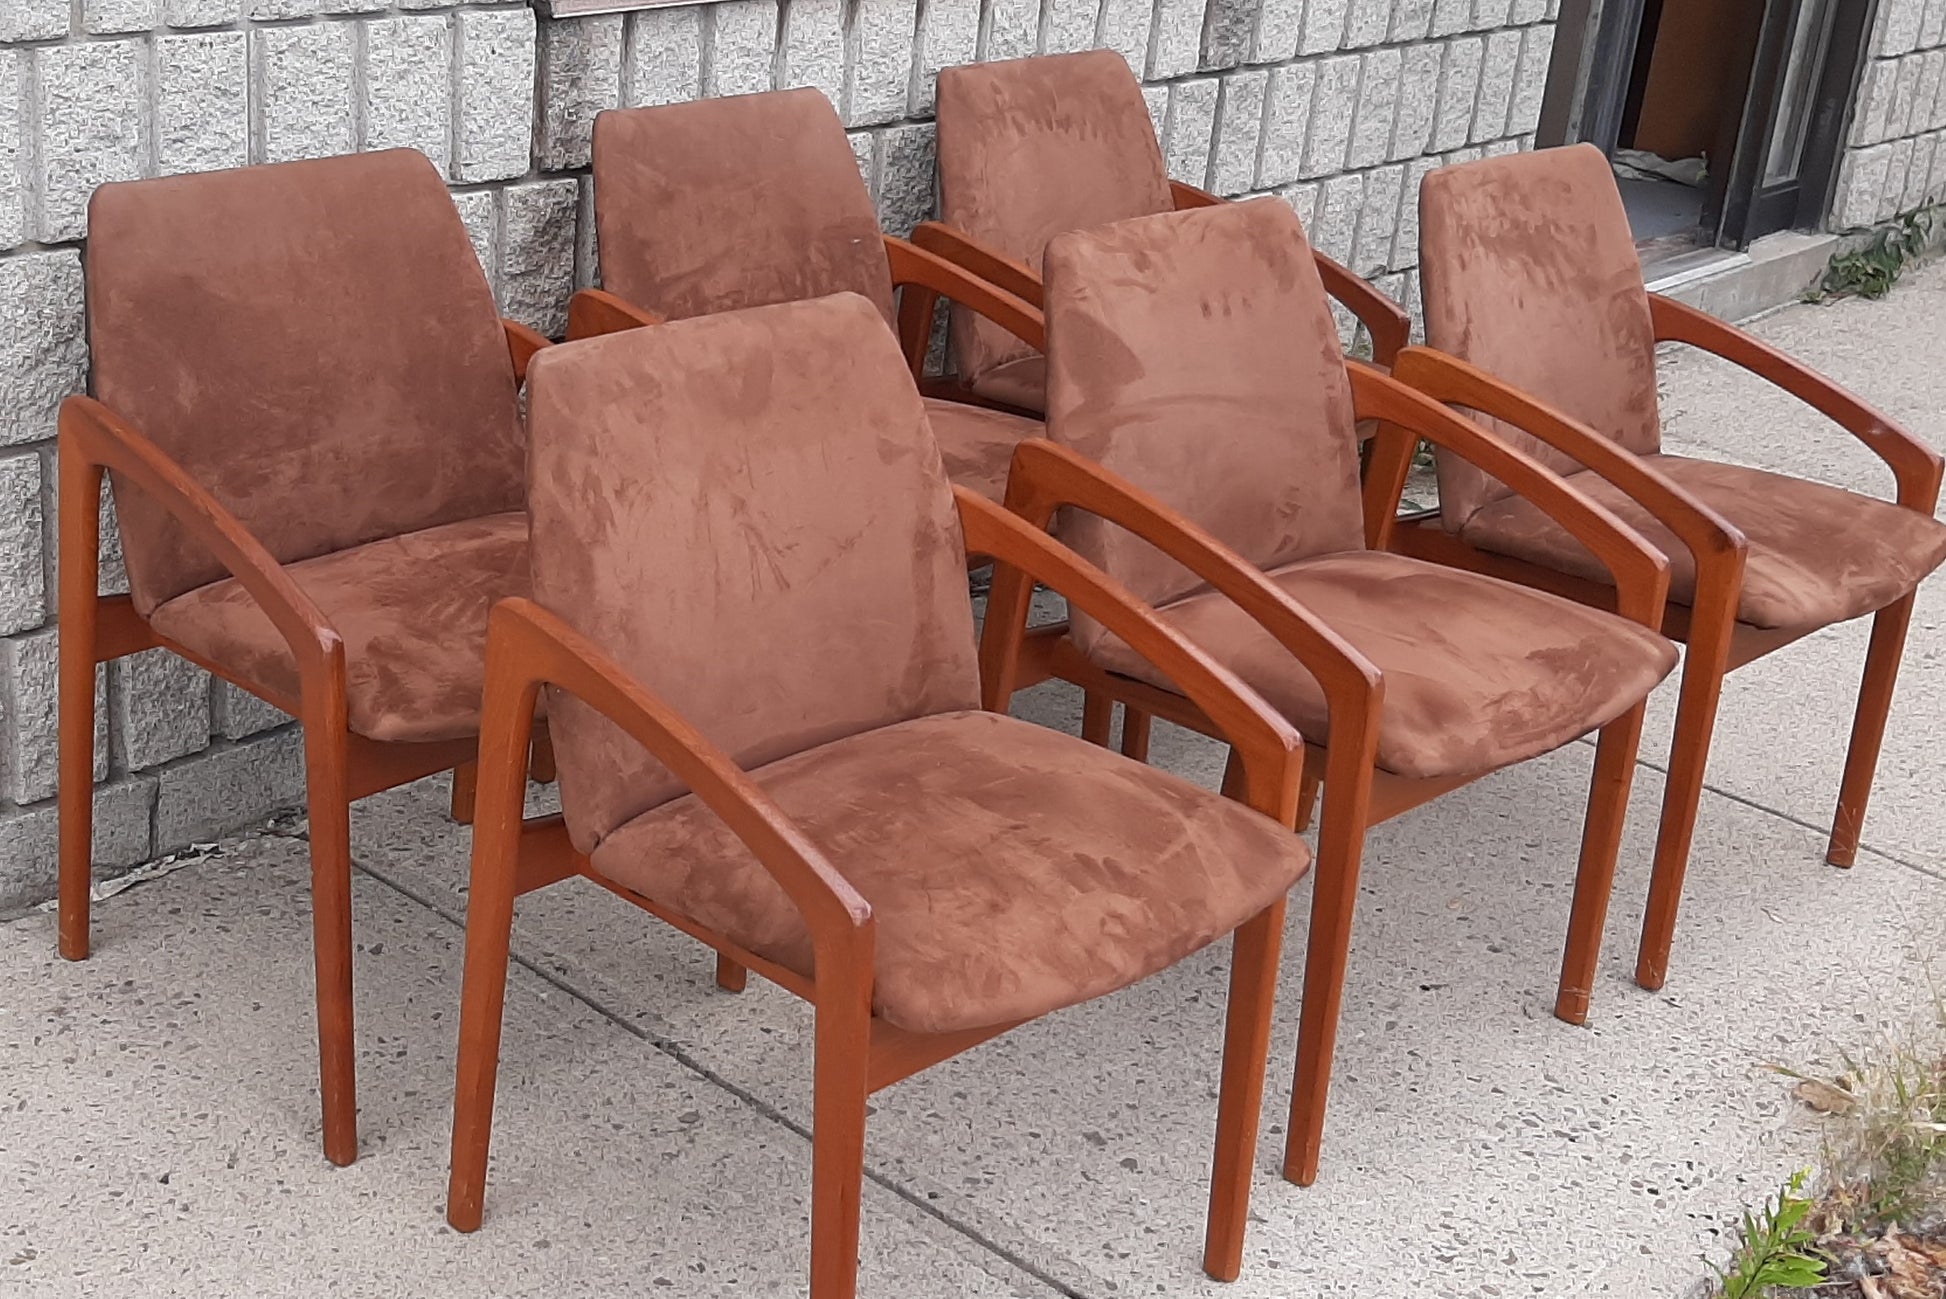 6 Danish MCM Teak Angled Armchairs by Kai Kristiansen RESTORED, each chair $279 - Mid Century Modern Toronto